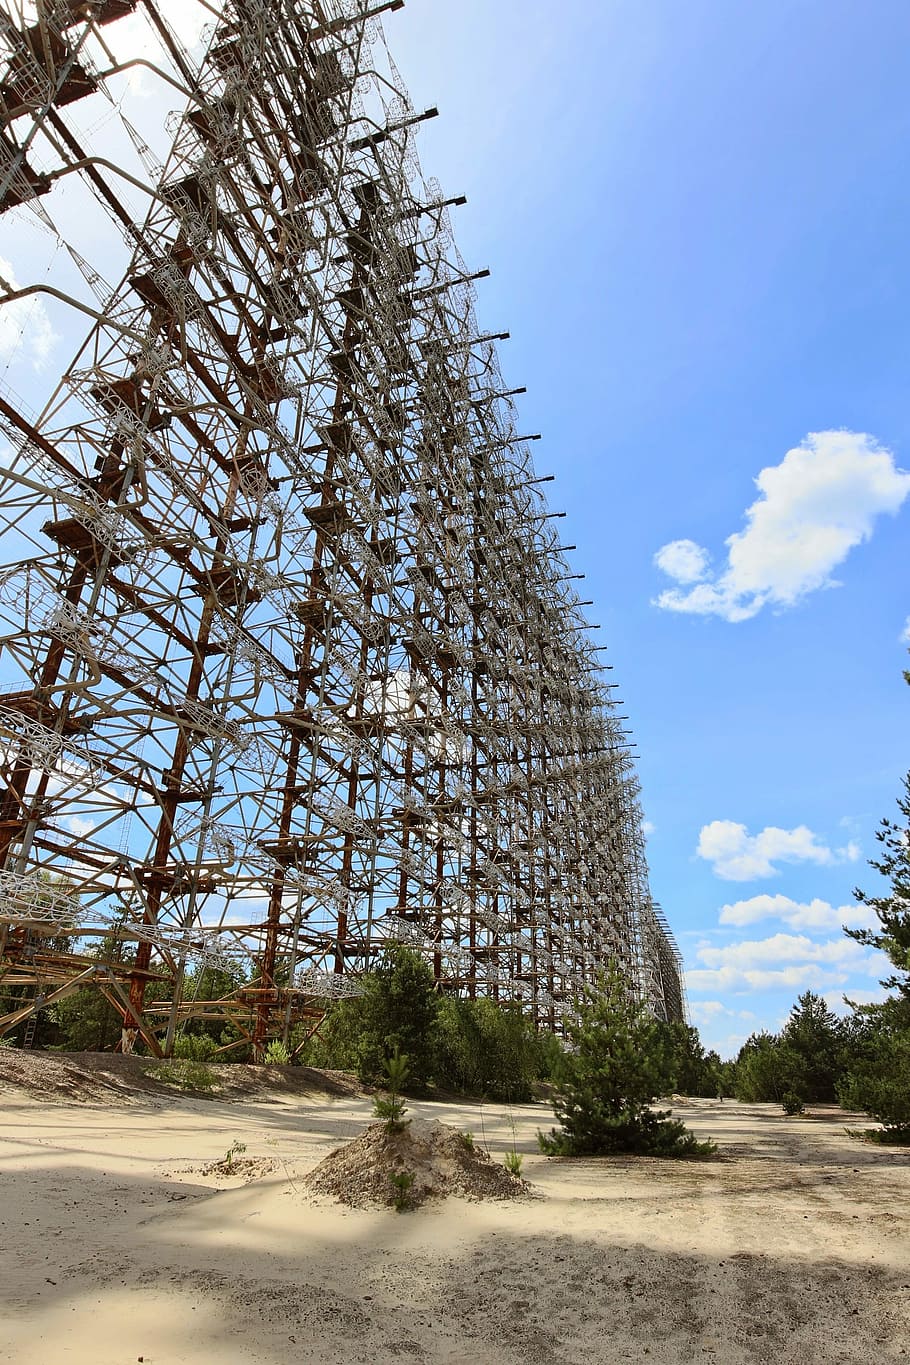 Chernobyl, Pripyat, Energia nuclear, céu, nuvem - céu, dia, ninguém, árvore, vista de ângulo baixo, plantar